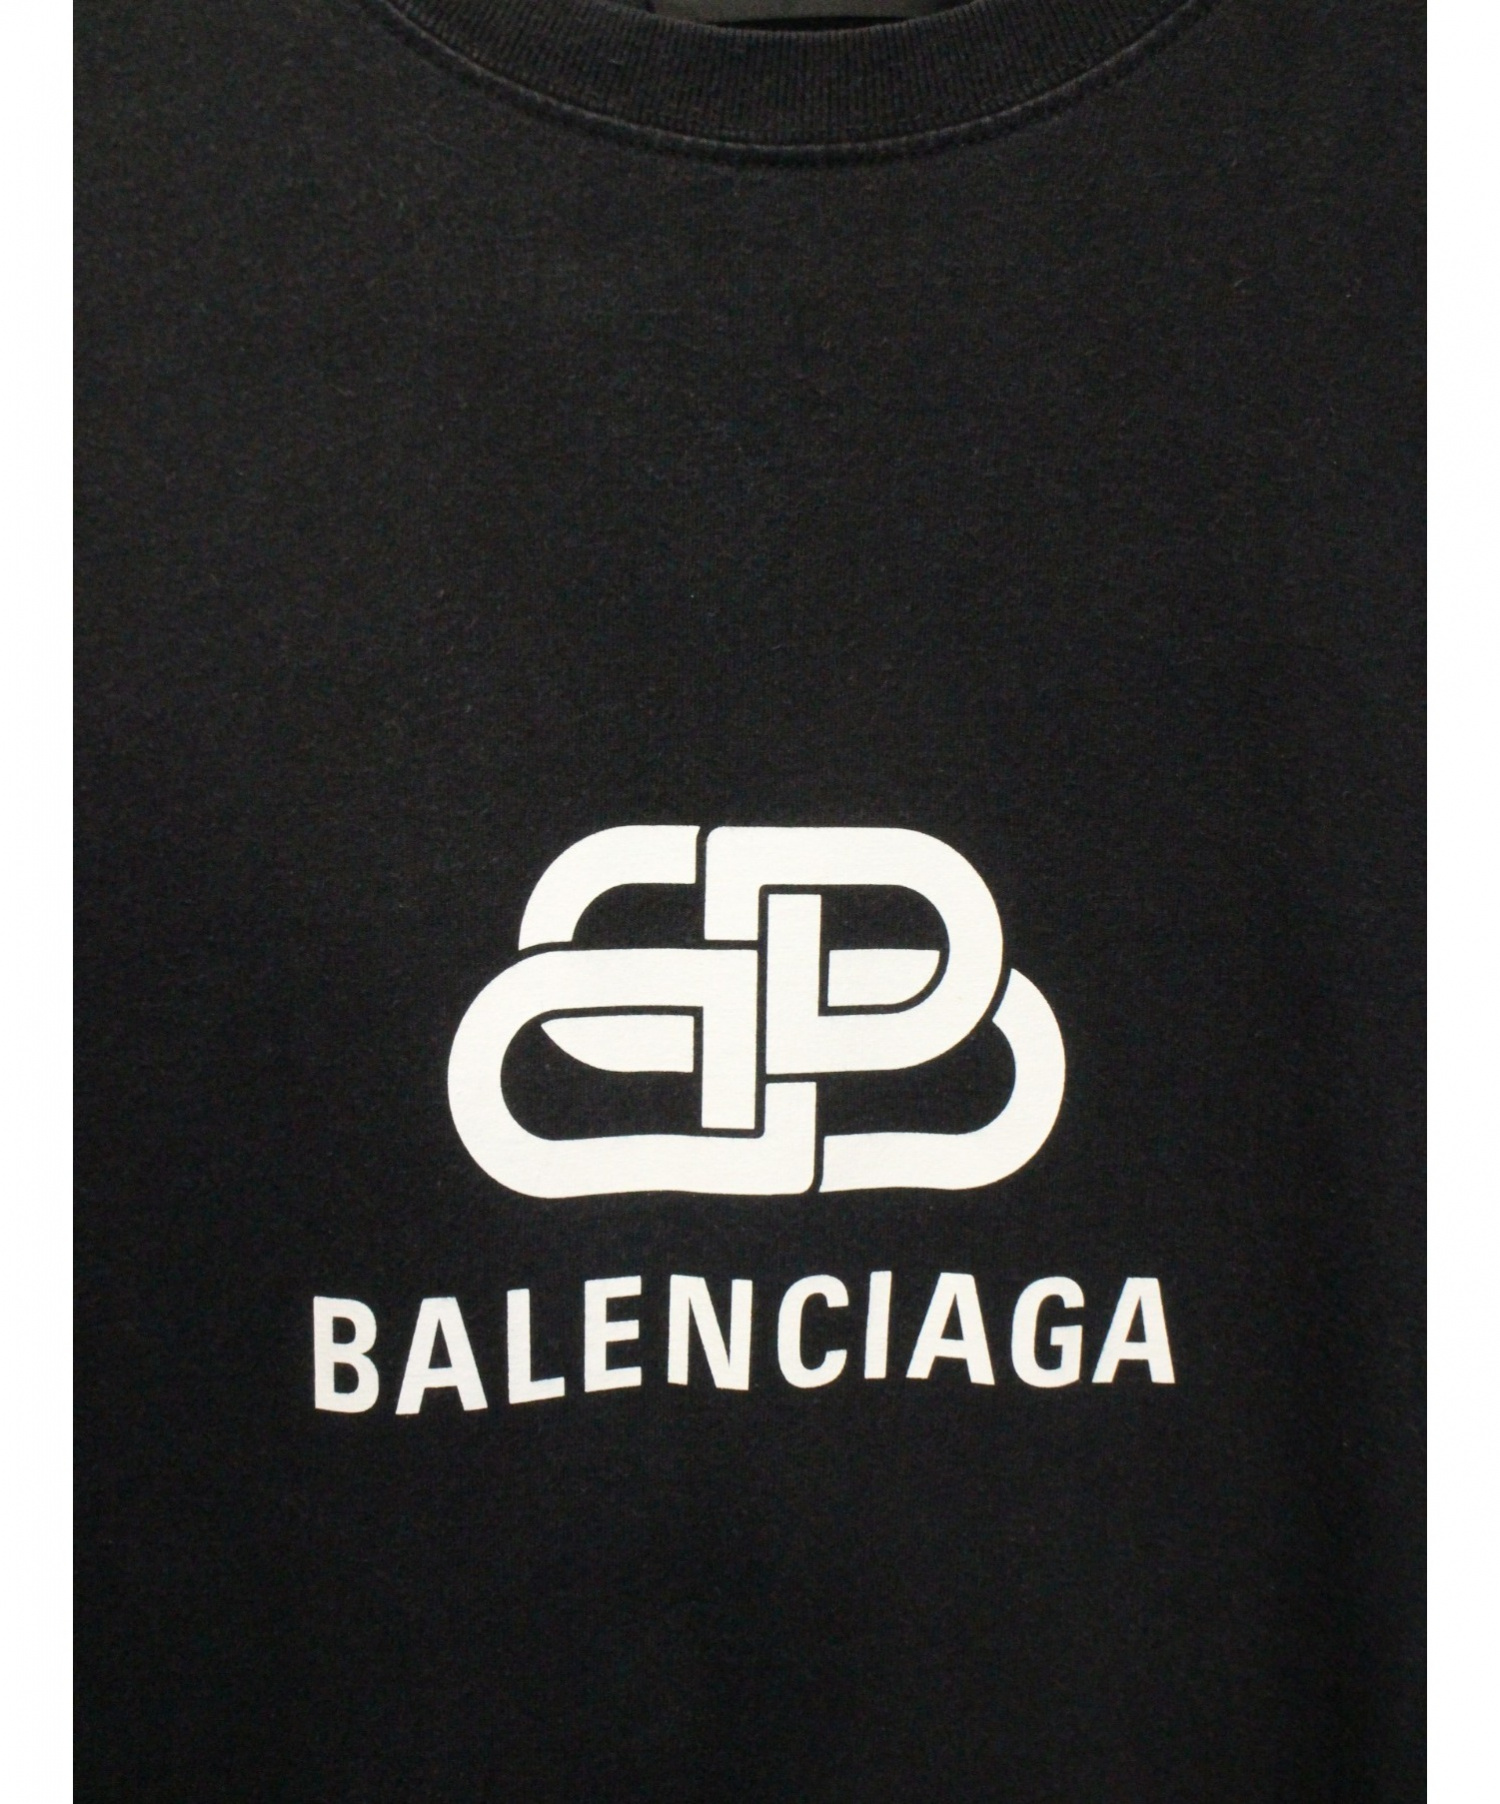 BALENCIAGA (バレンシアガ) BBロゴプリントTシャツ ブラック サイズ:S